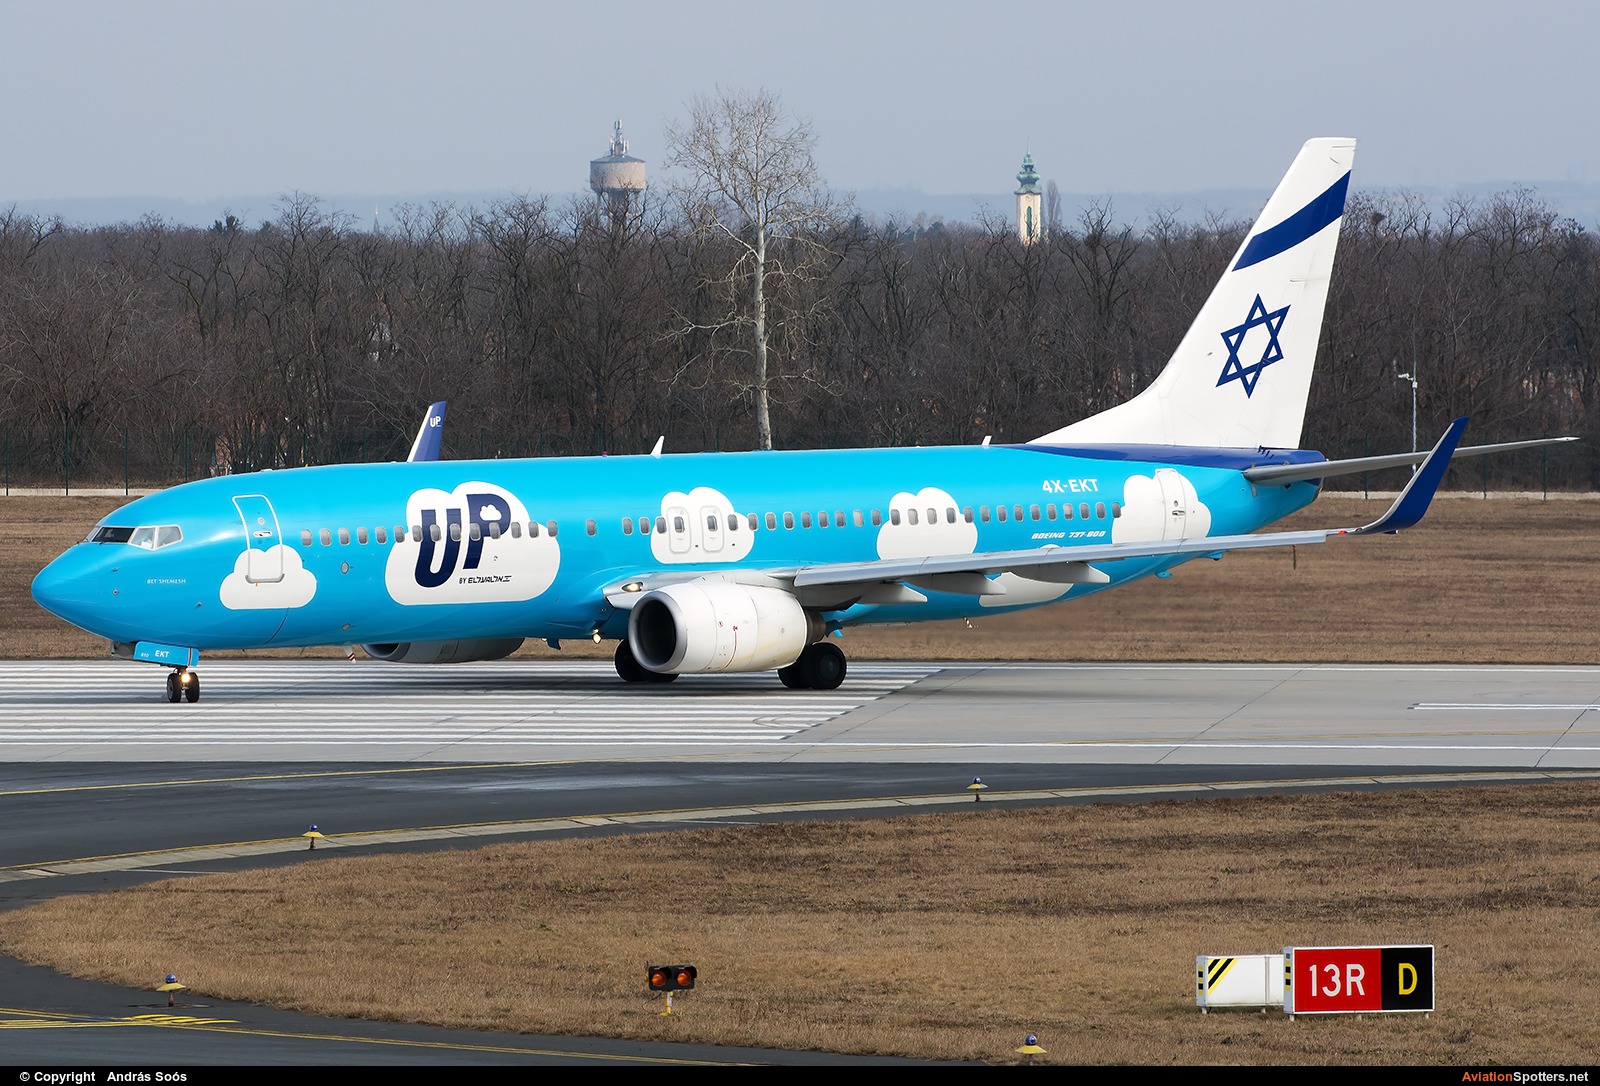 Up (El Al Israel Airlines)  -  737-800  (4X-EKT) By András Soós (sas1965)